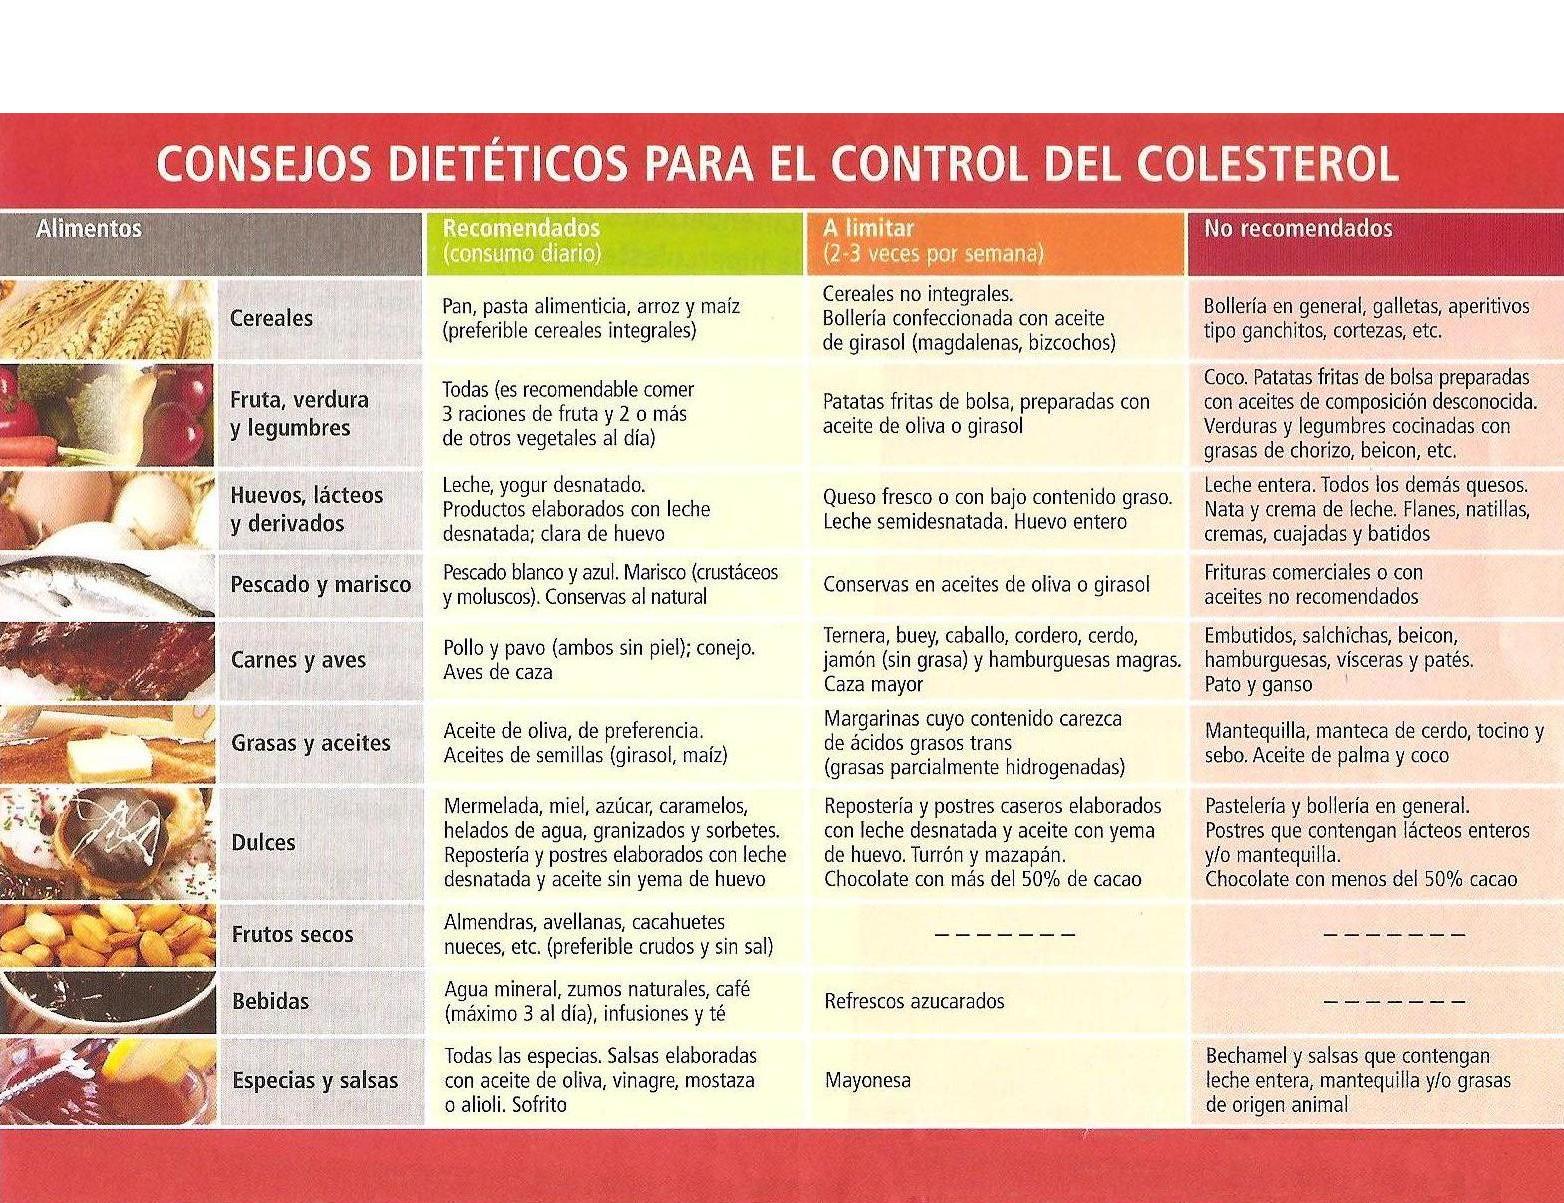 http://comefruta.es/wp-content/uploads/2013/04/consejos_dieteticos_control_colesterol_pacientes.jpg